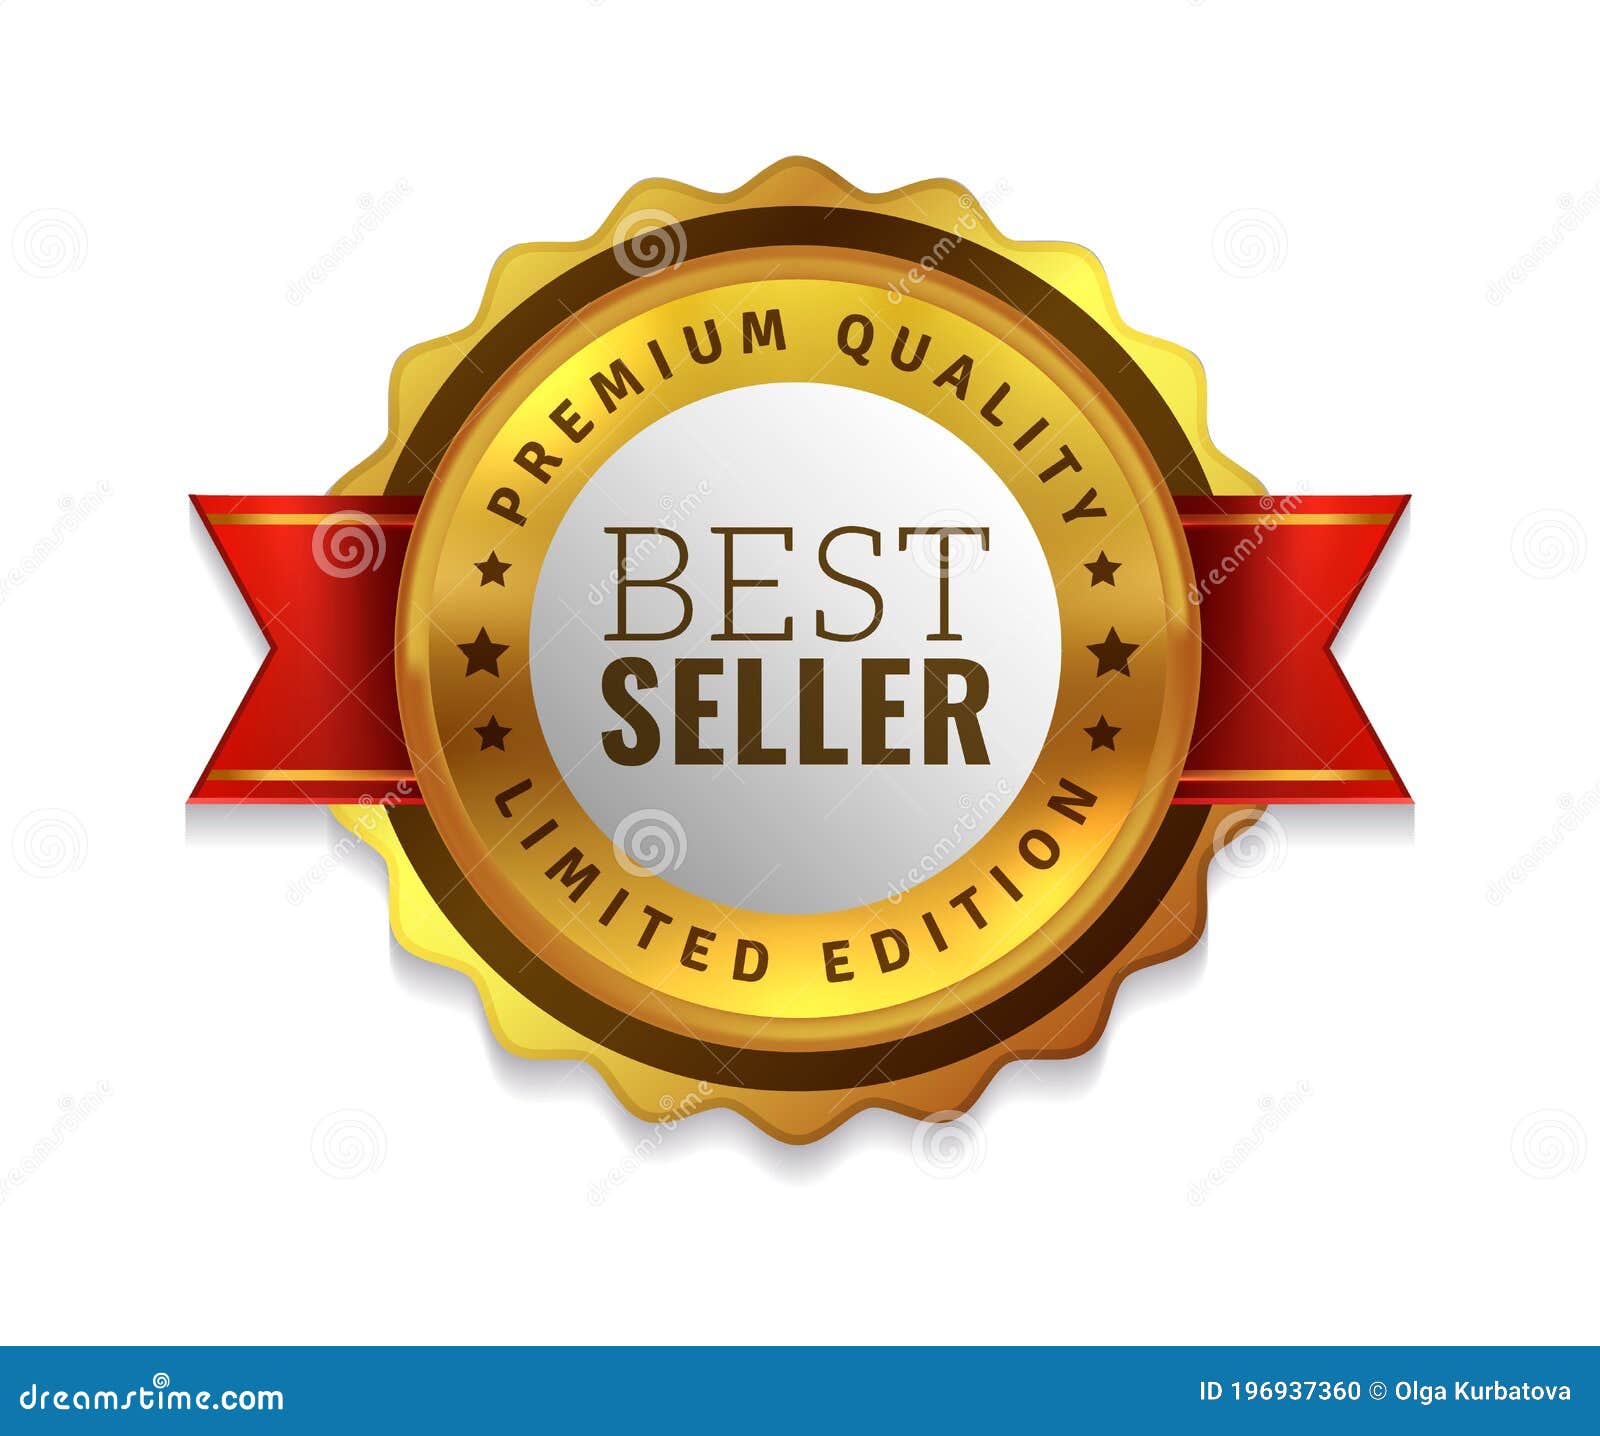 https://thumbs.dreamstime.com/z/best-seller-badge-premium-golden-emblem-luxury-genuine-highest-quality-product-gold-sale-offer-round-promotion-decoration-196937360.jpg